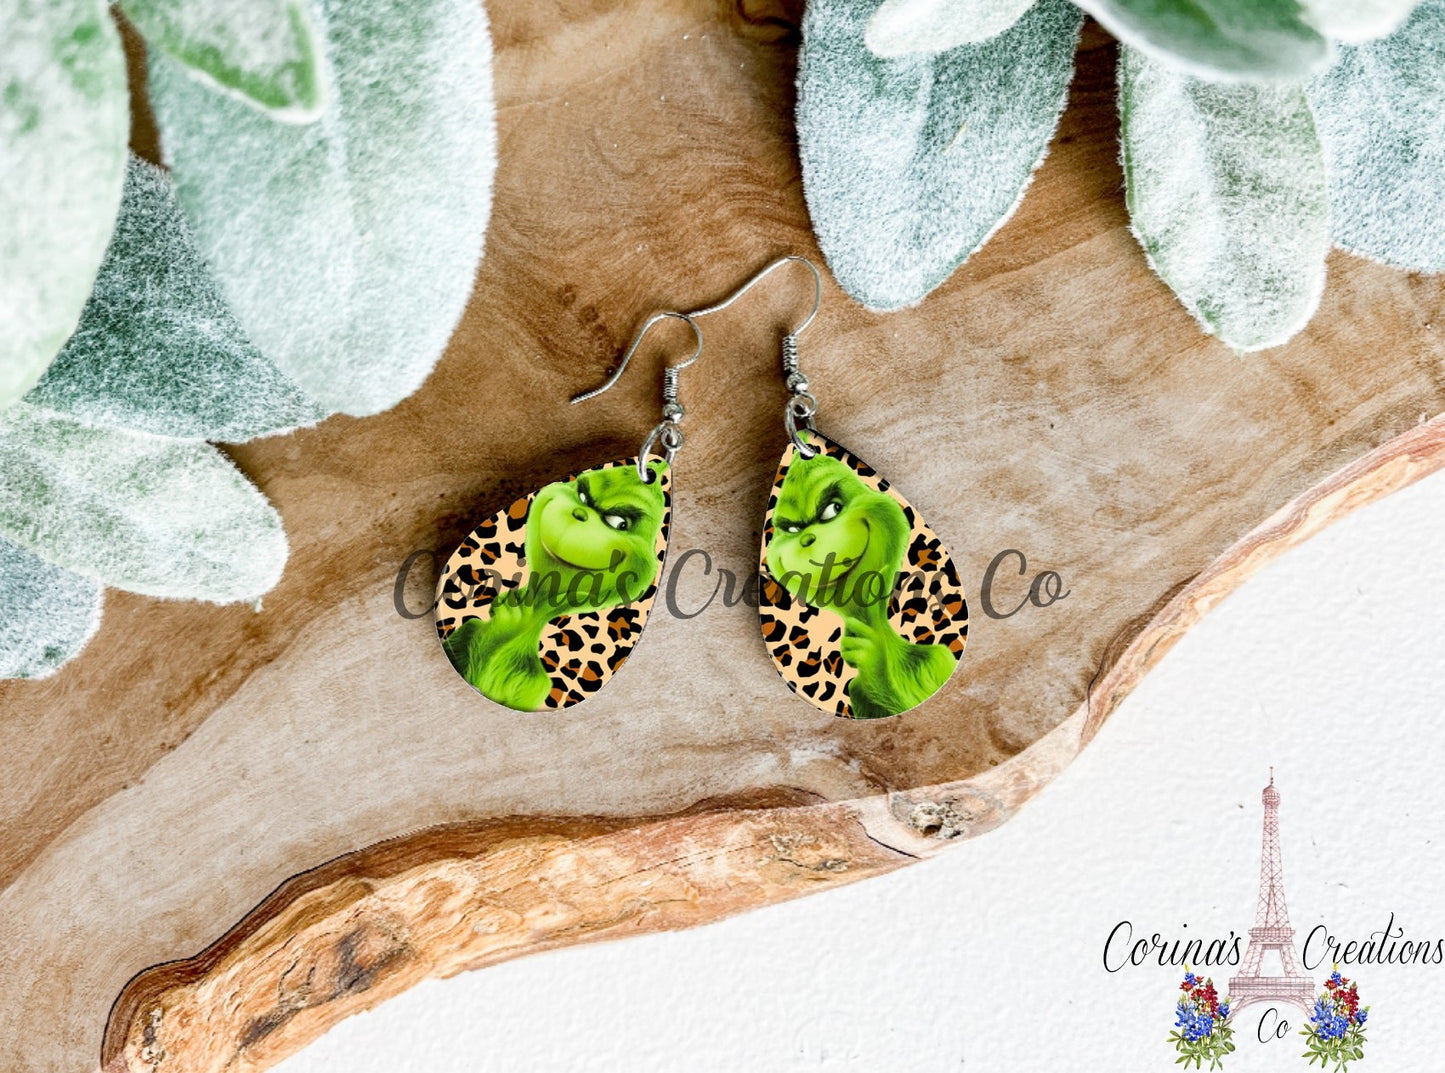 The Green One Leopard Print Sublimated Teardrop Earrings